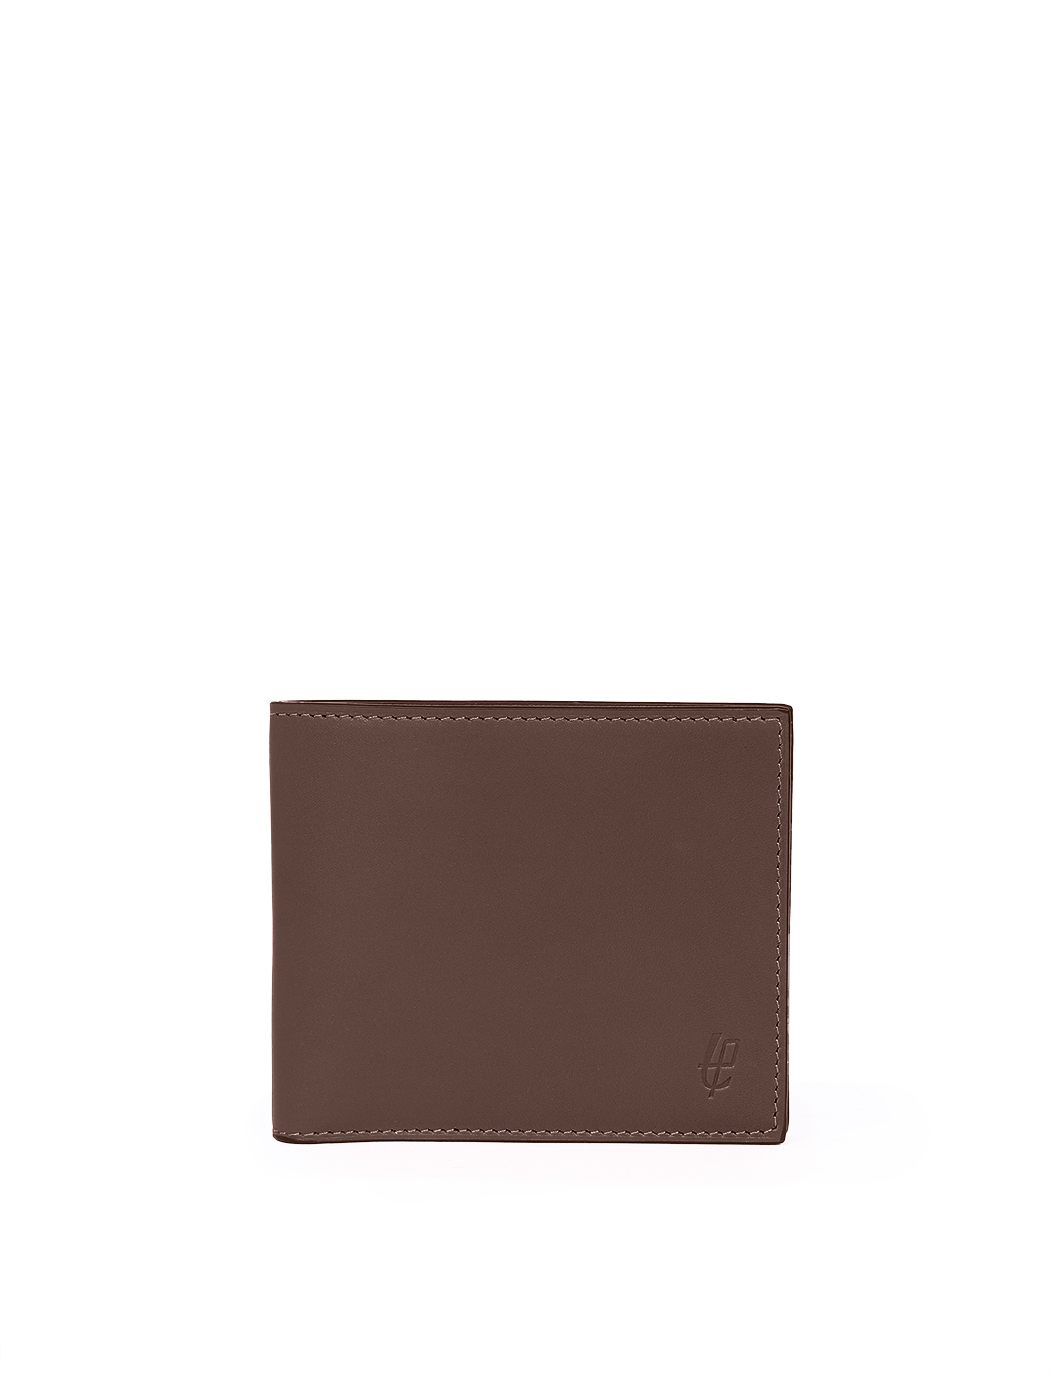 Billfold Wallet 8 Card Slots Leather Brown